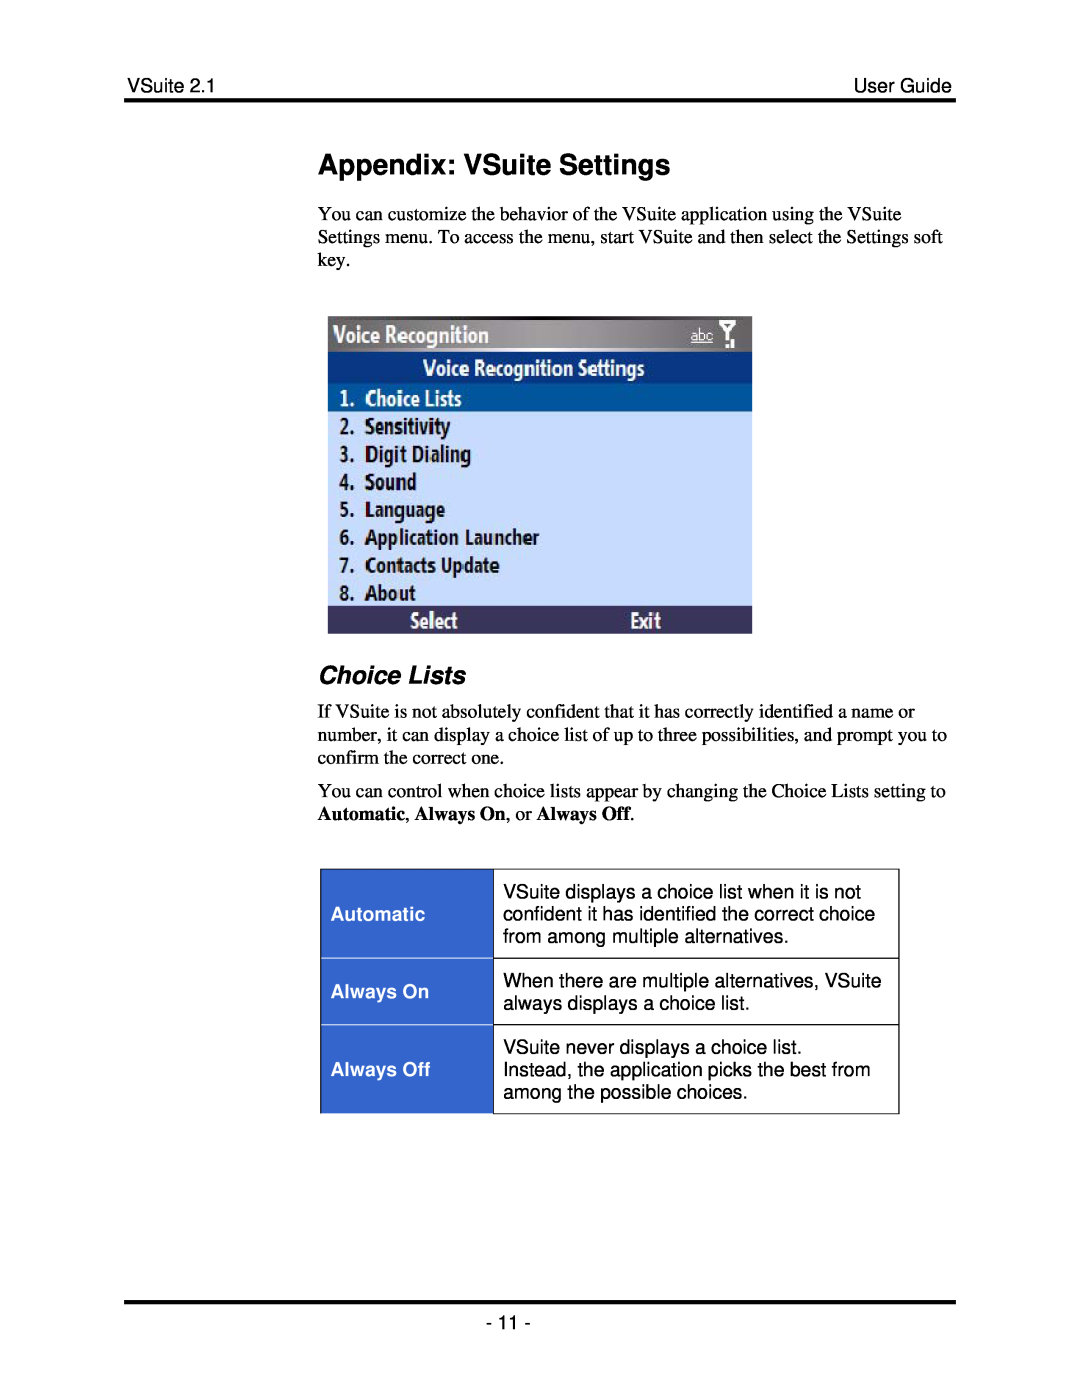 Motorola 2.1 manual Appendix VSuite Settings, Choice Lists, Automatic Always On Always Off 